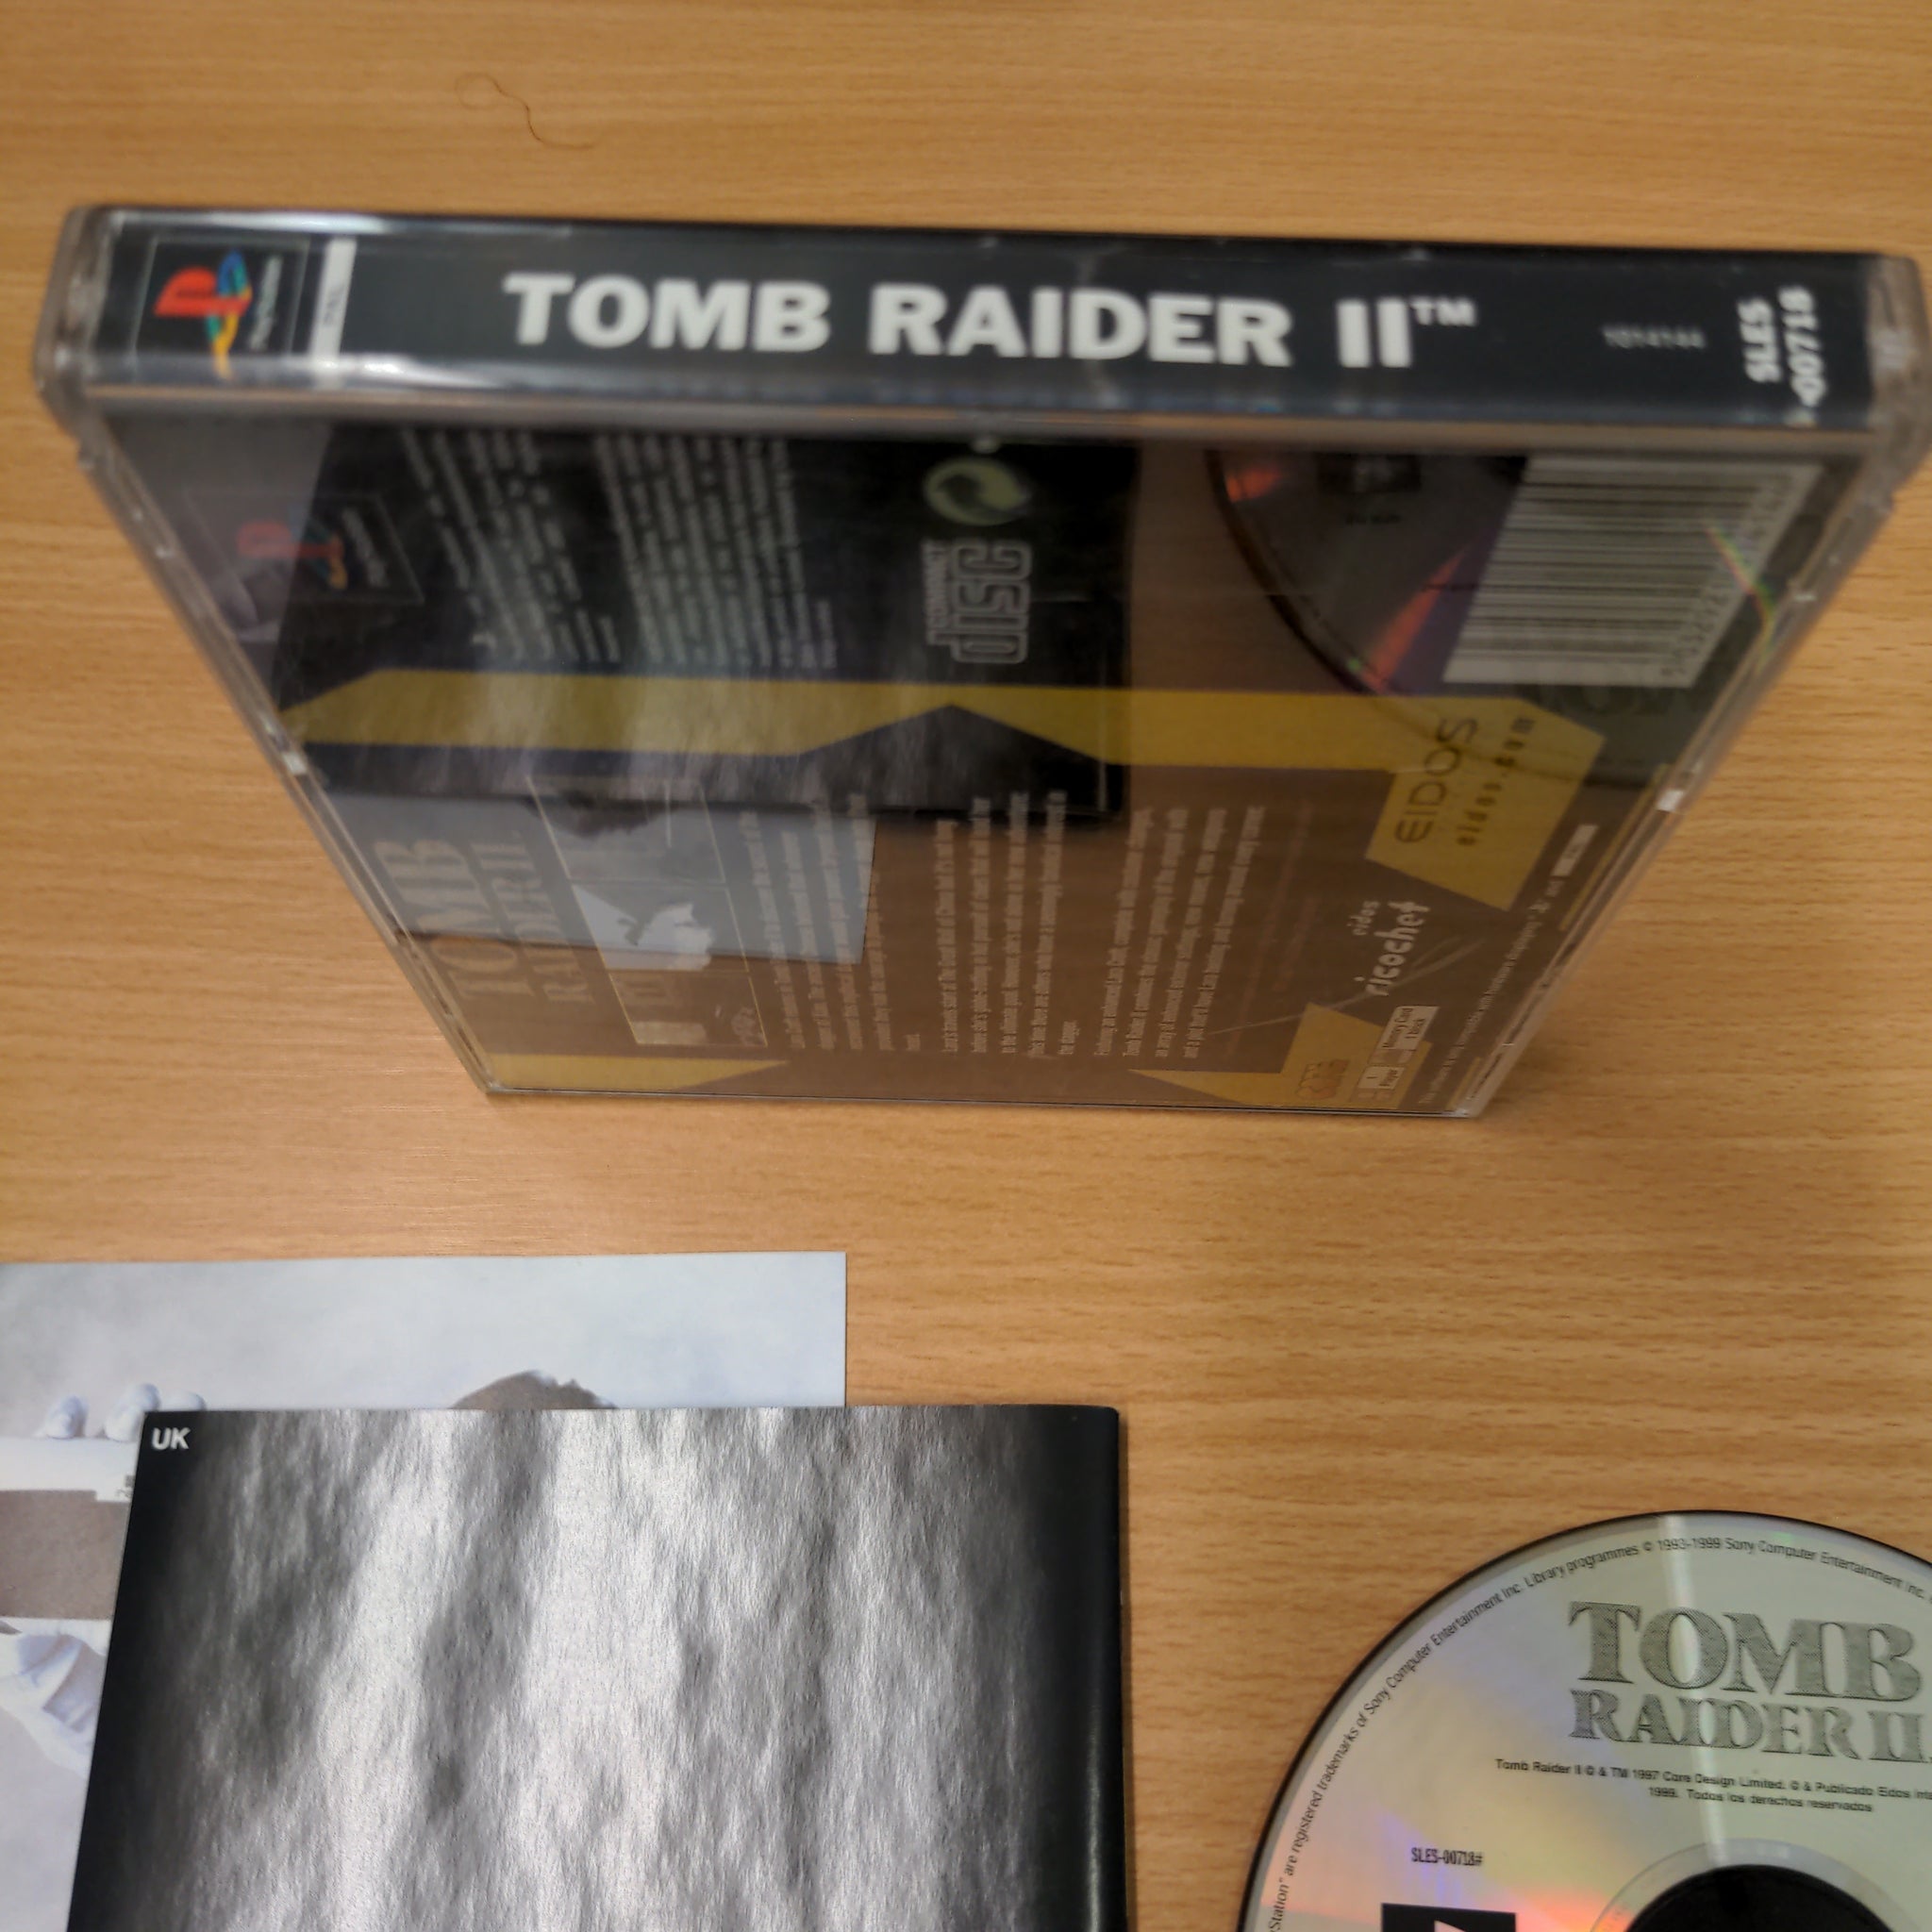 Tomb Raider II (Eidos Ricochet) Sony PS1 game